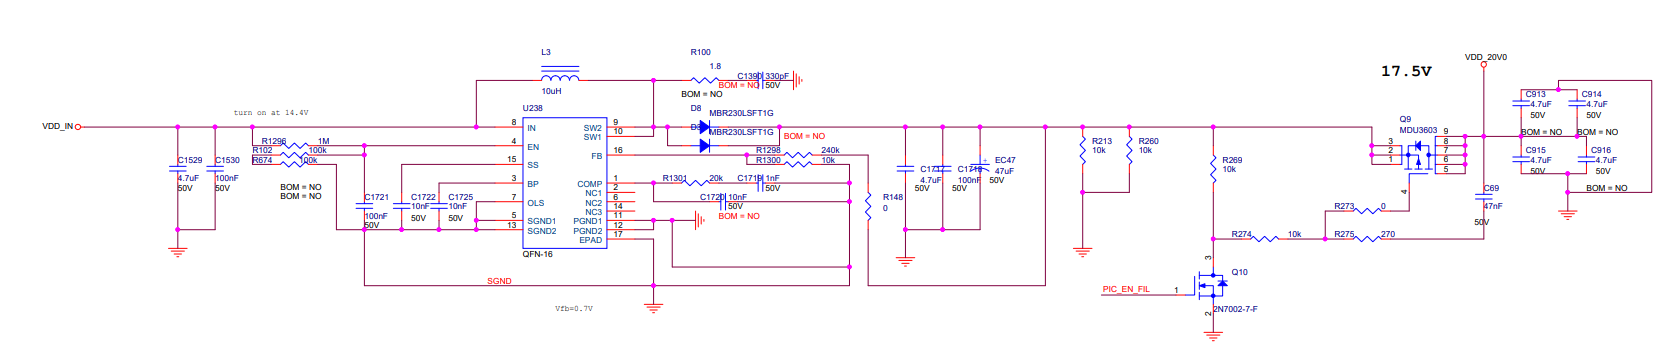 D7 boost circuit schematic